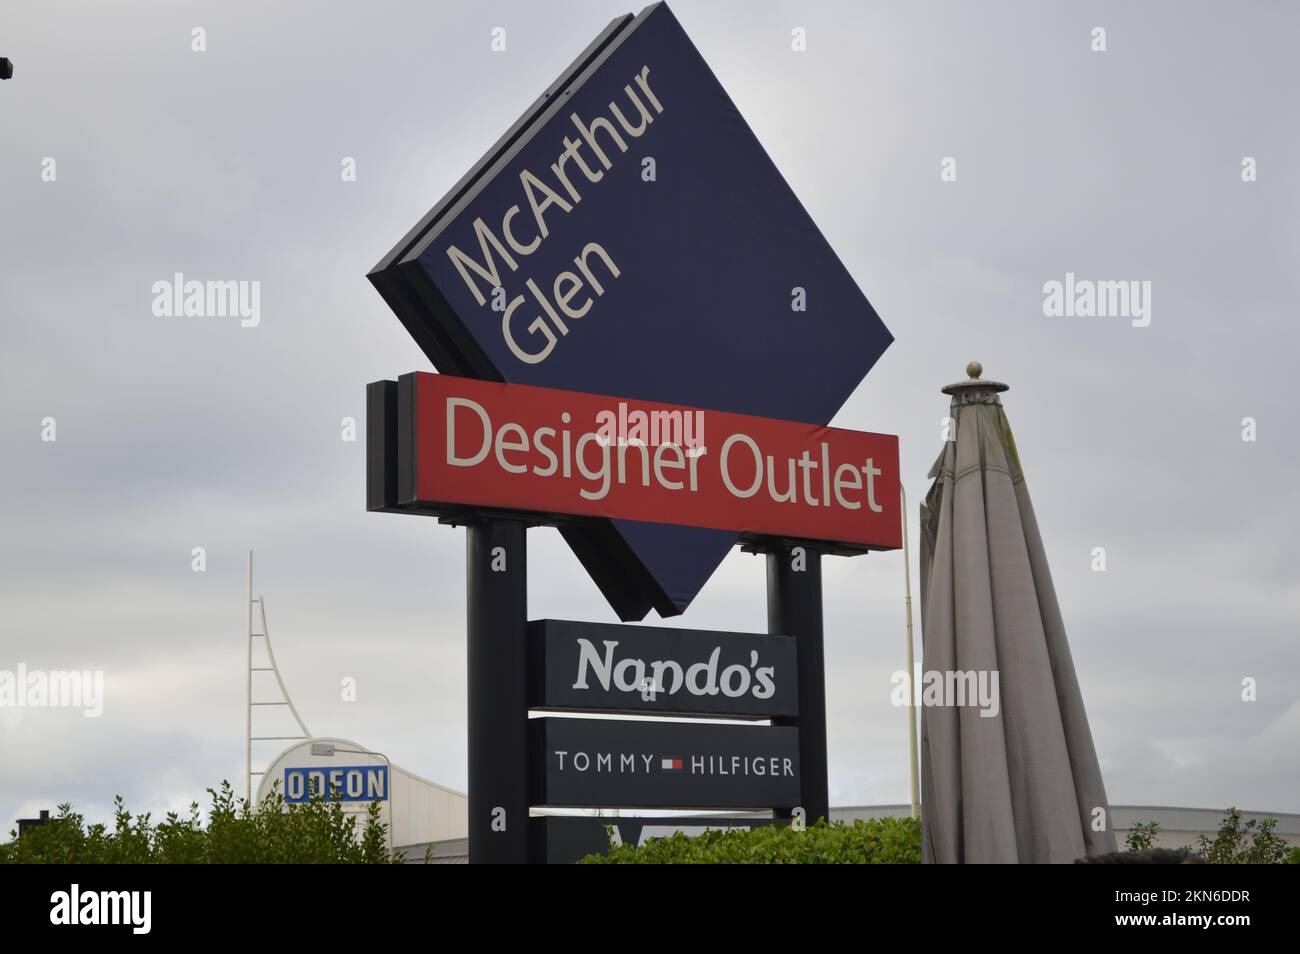 Mcarthur glen designer outlet hi-res stock photography and images - Alamy